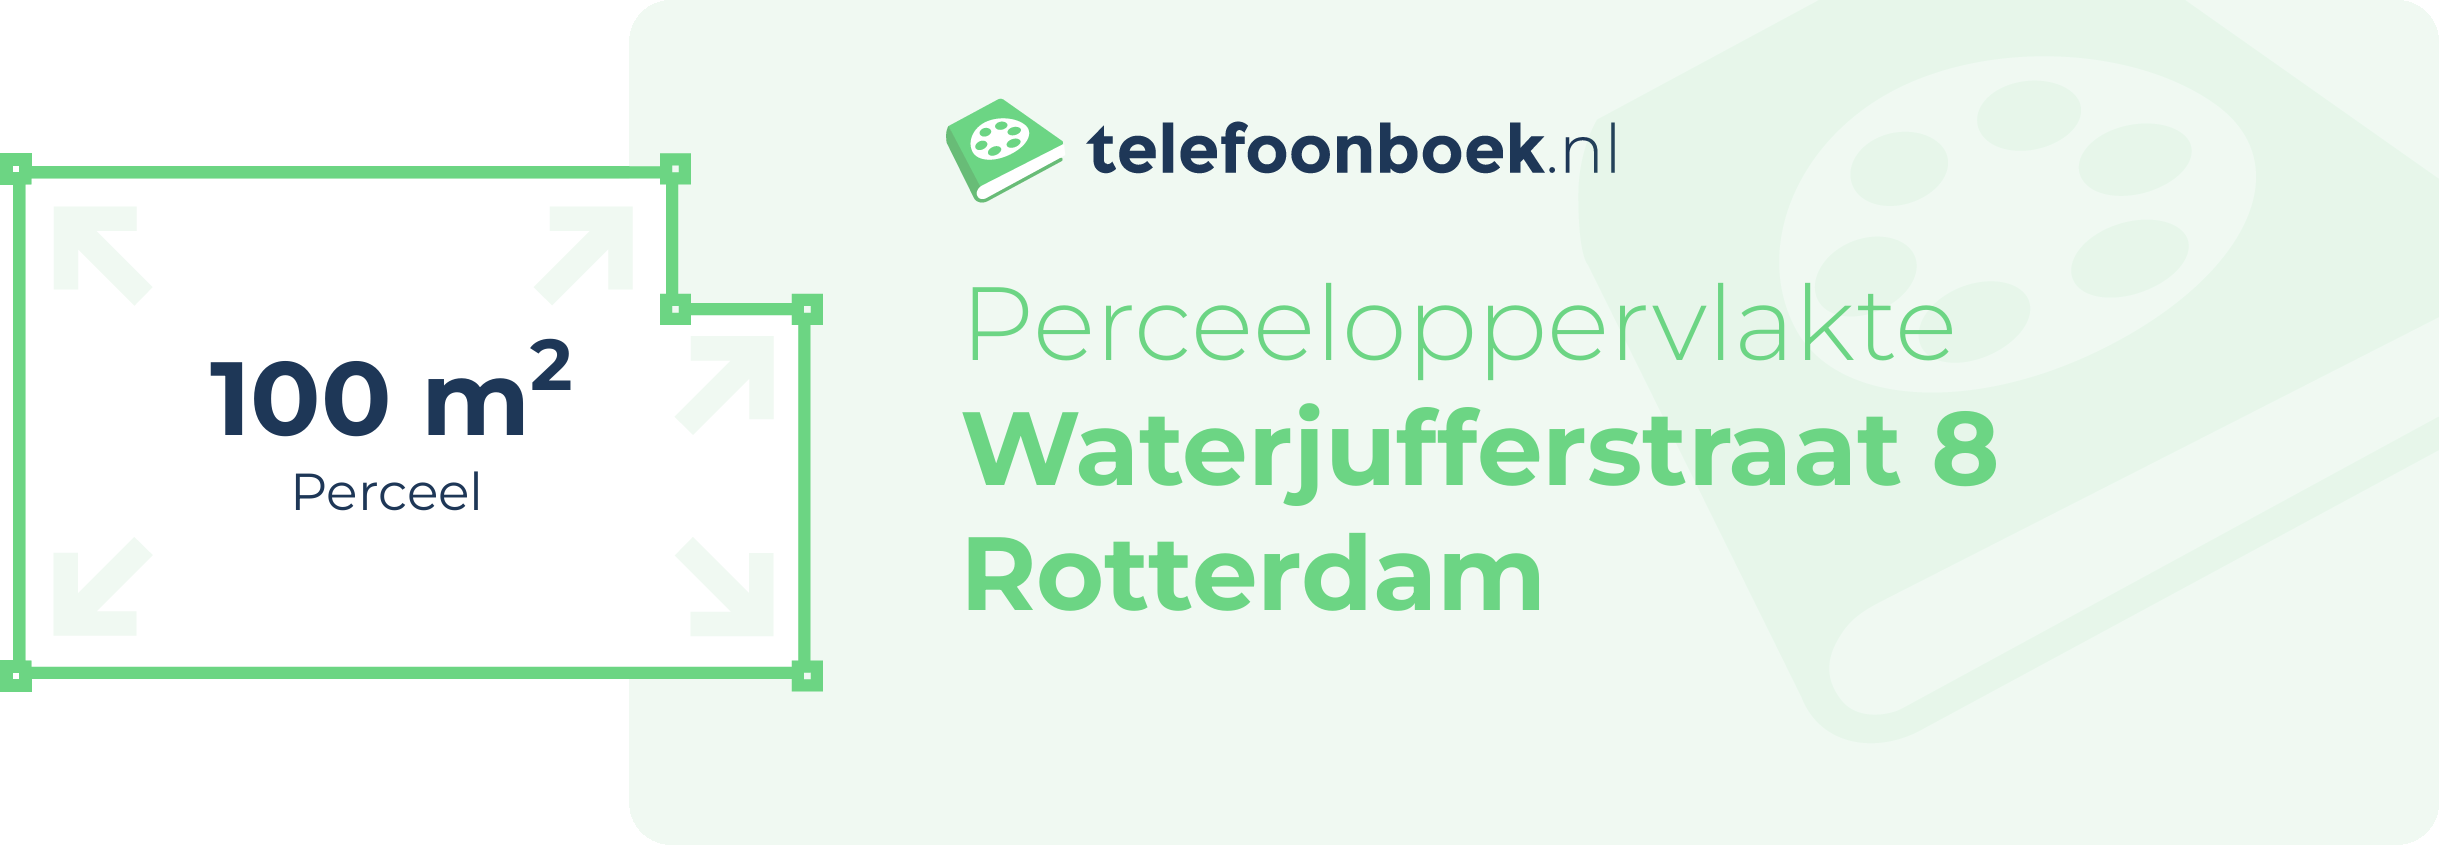 Perceeloppervlakte Waterjufferstraat 8 Rotterdam